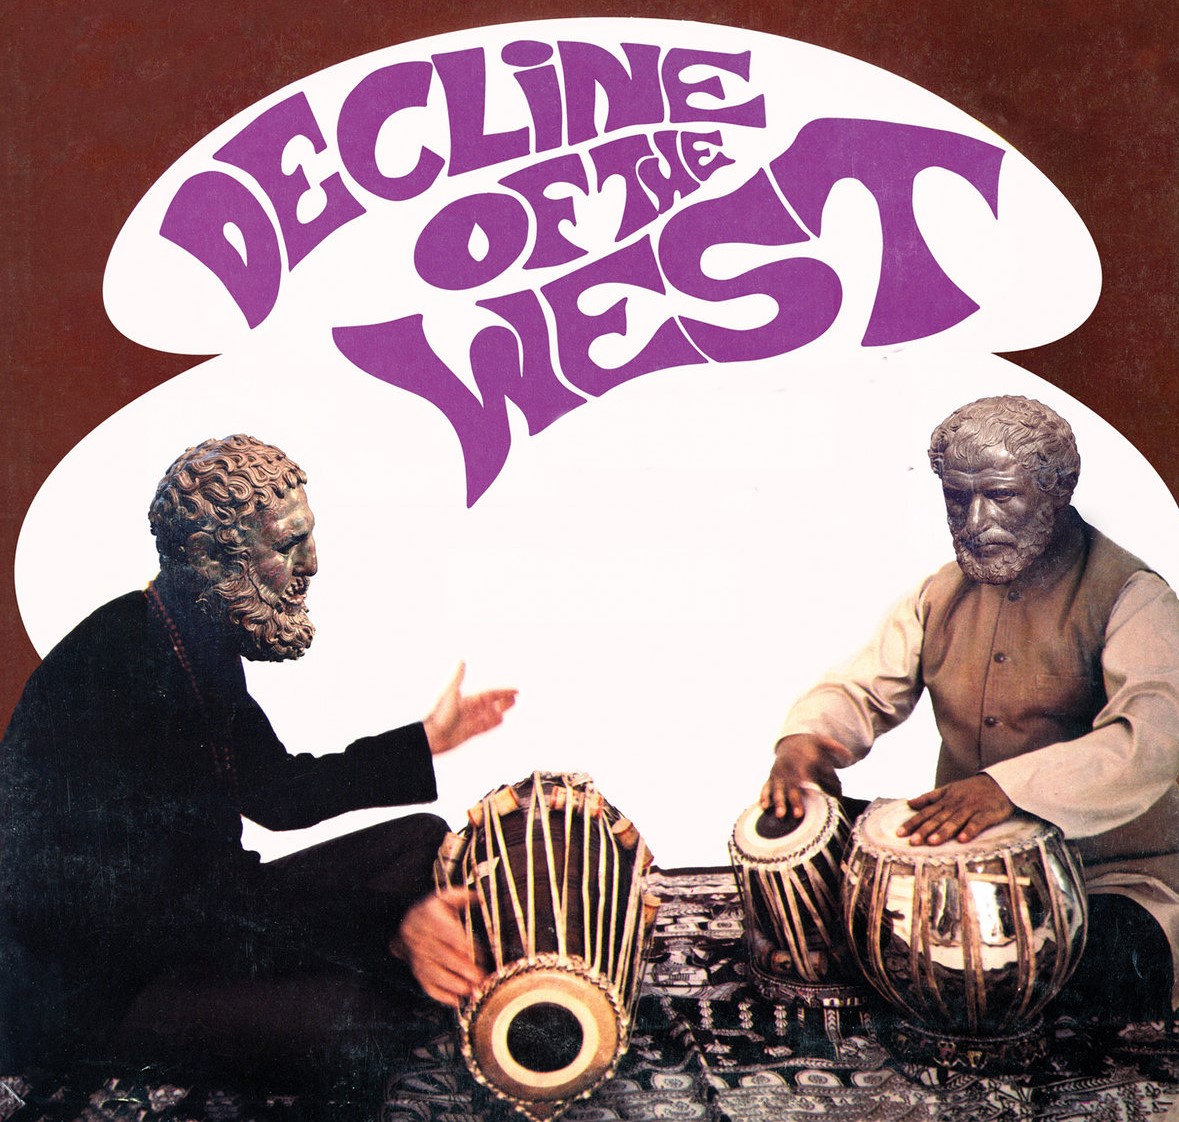 declne of the west